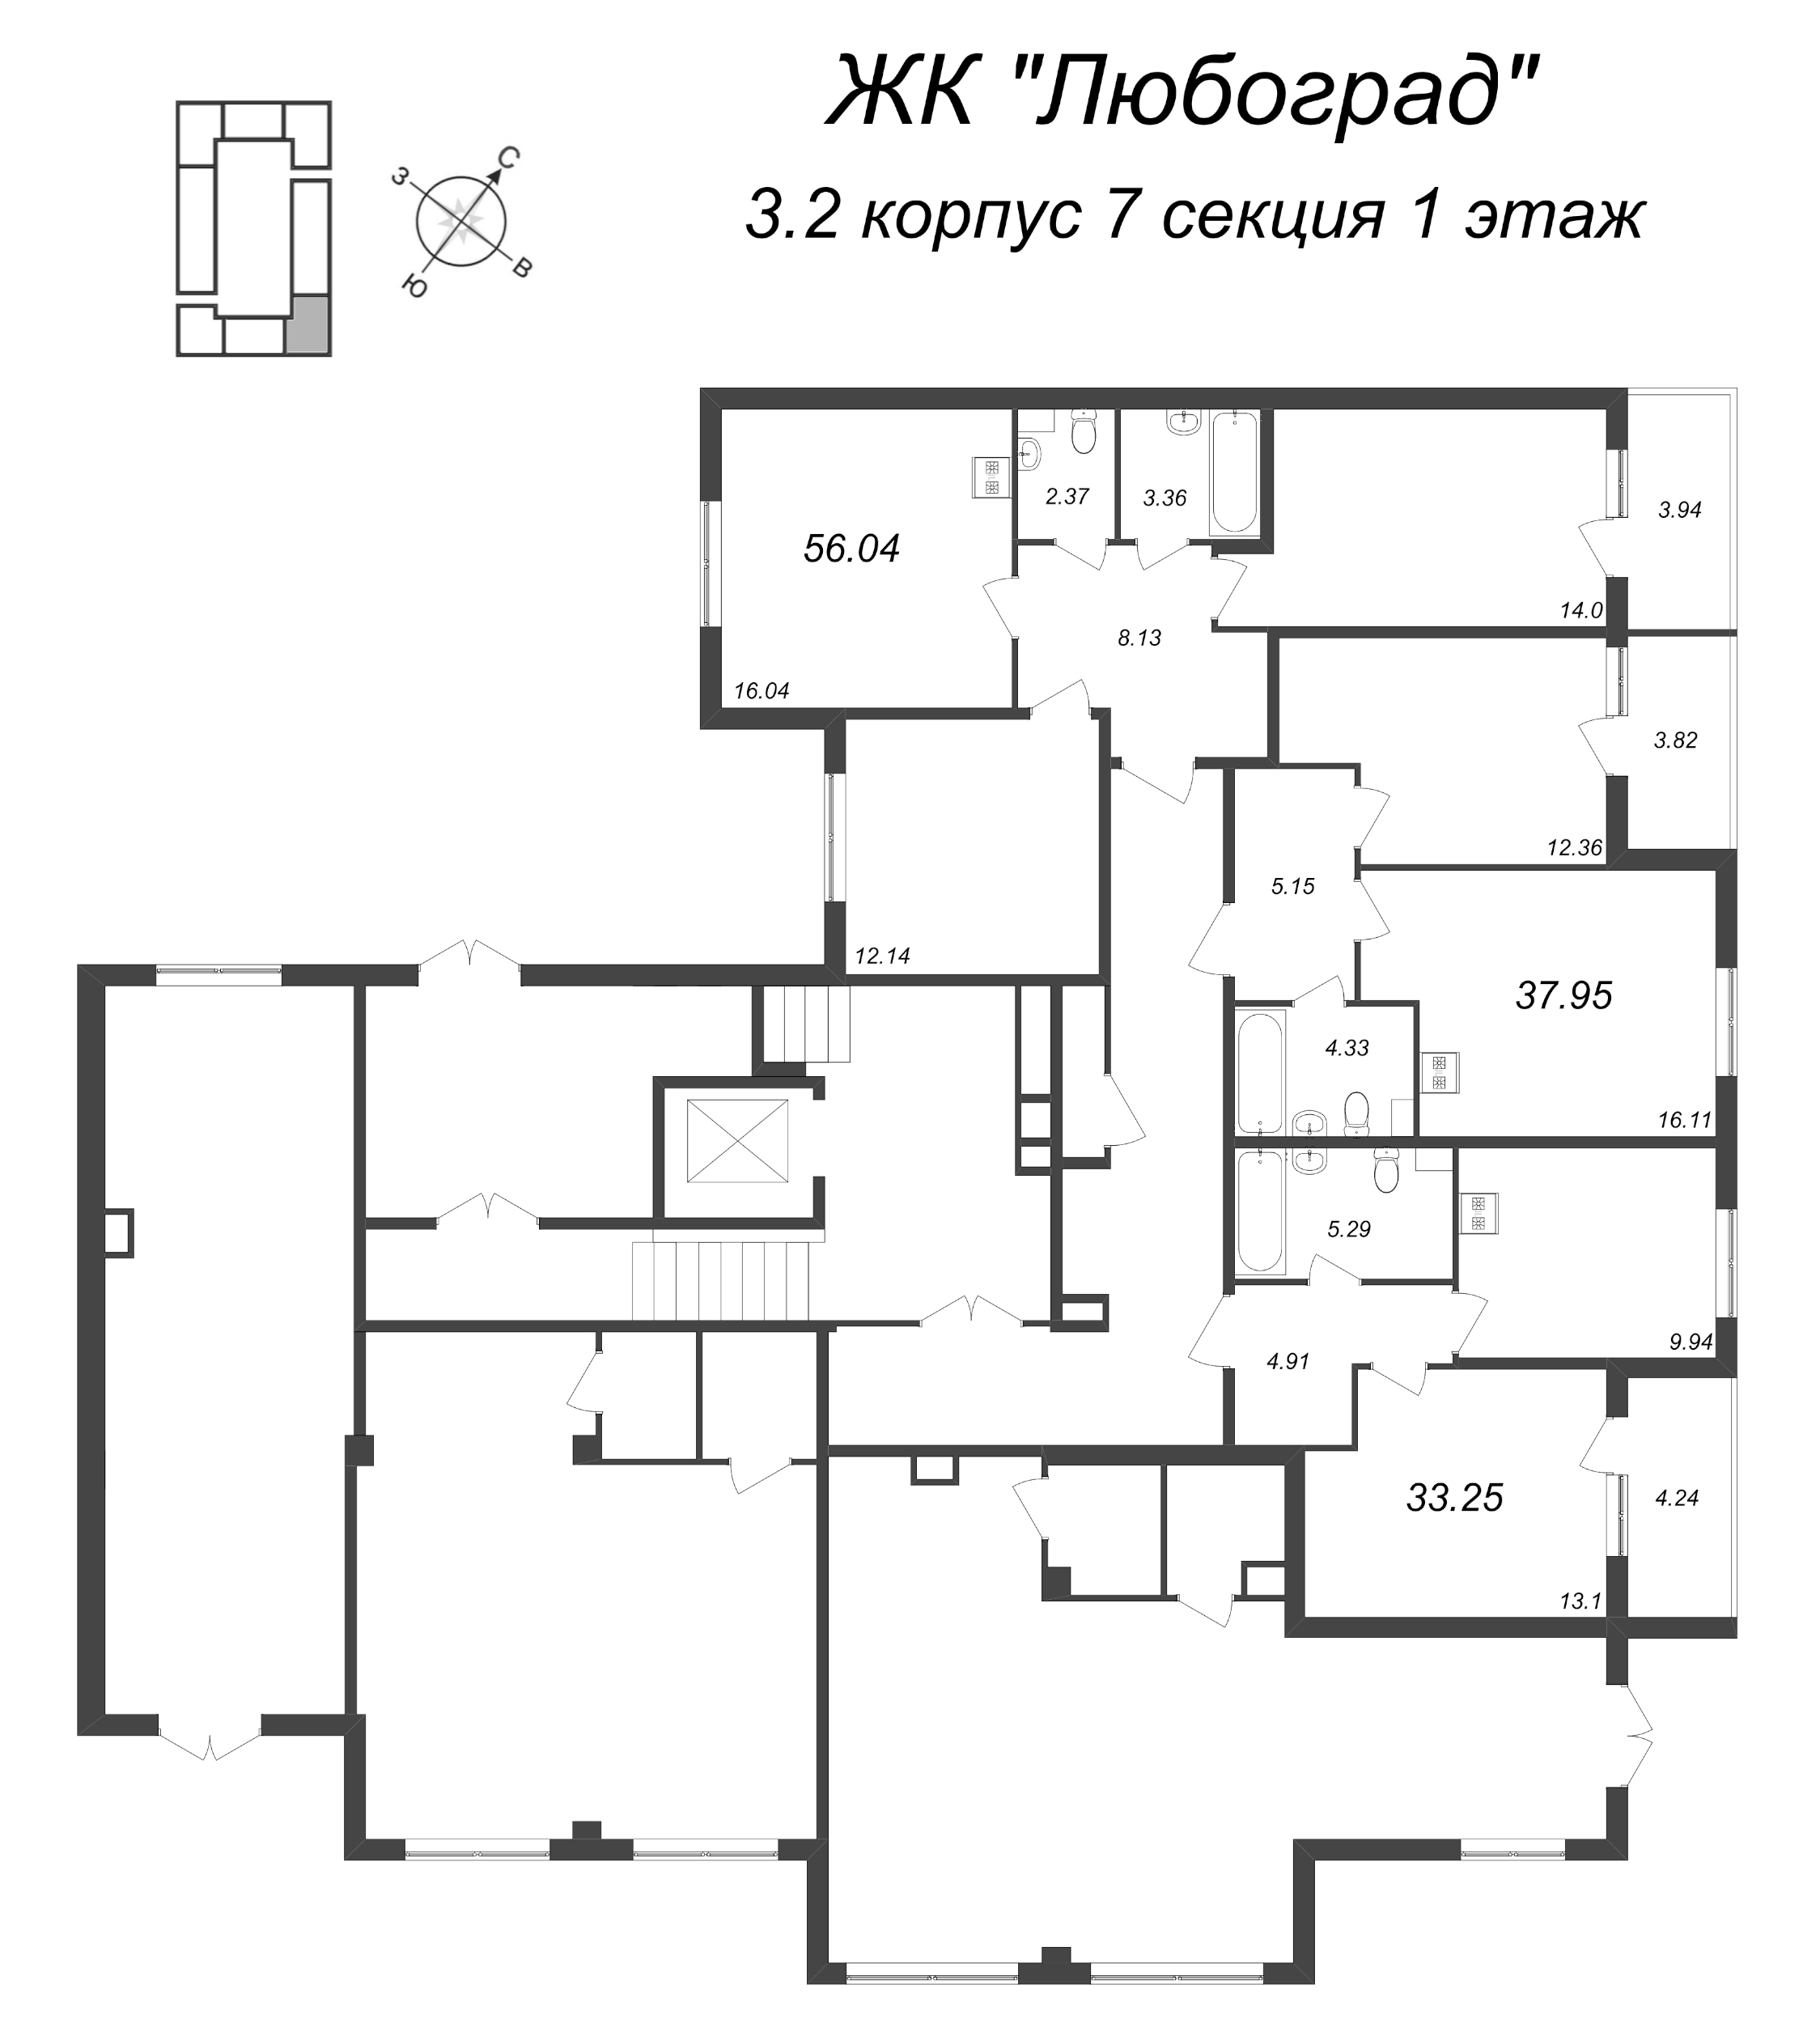 3-комнатная (Евро) квартира, 56.04 м² - планировка этажа